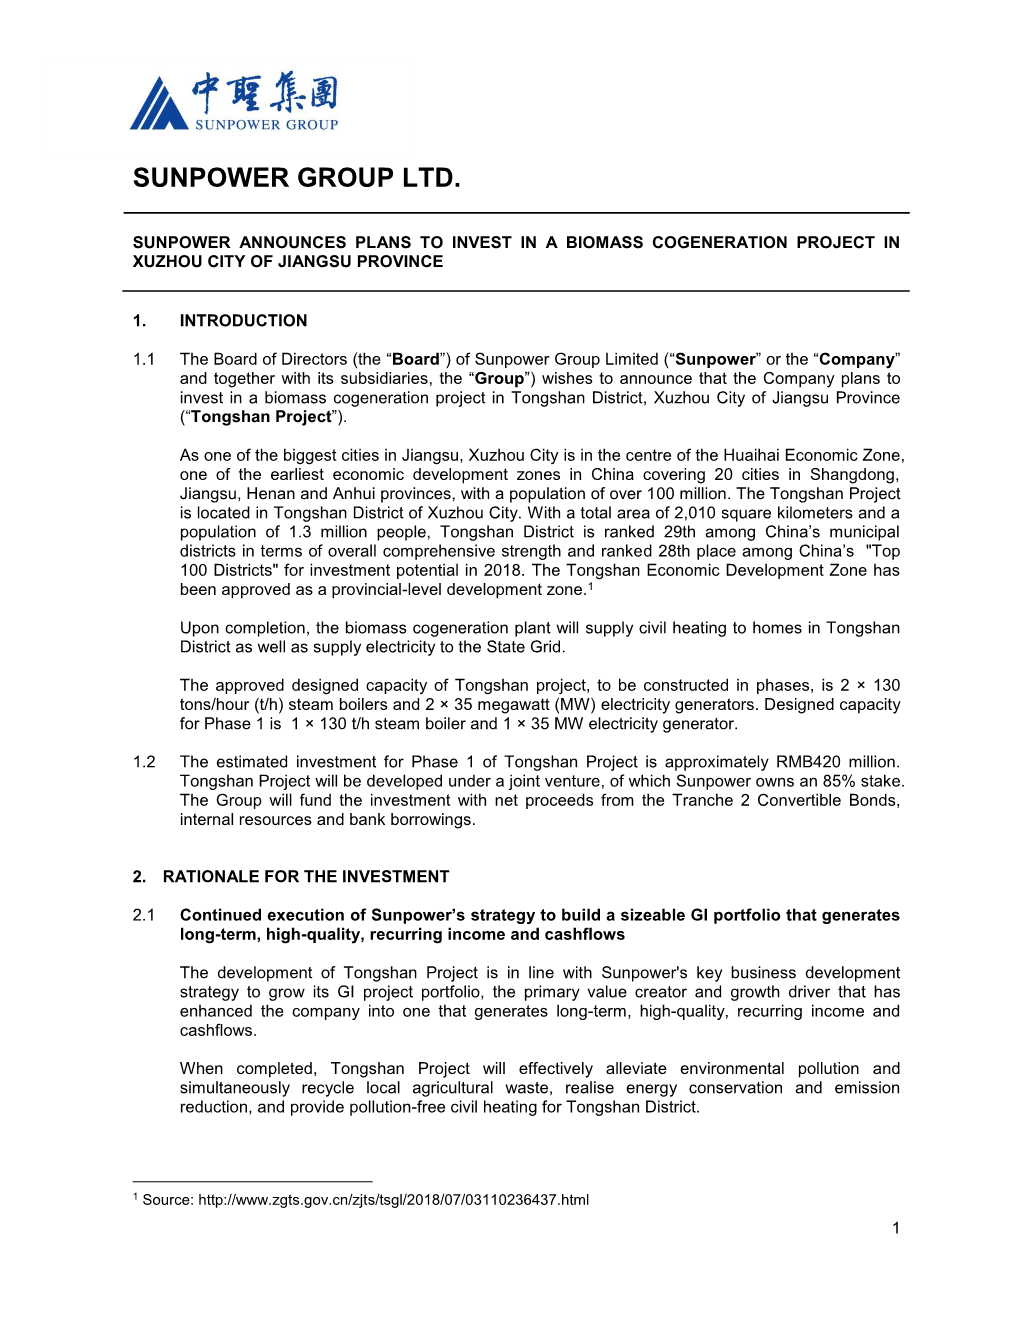 Sunpower Group Ltd